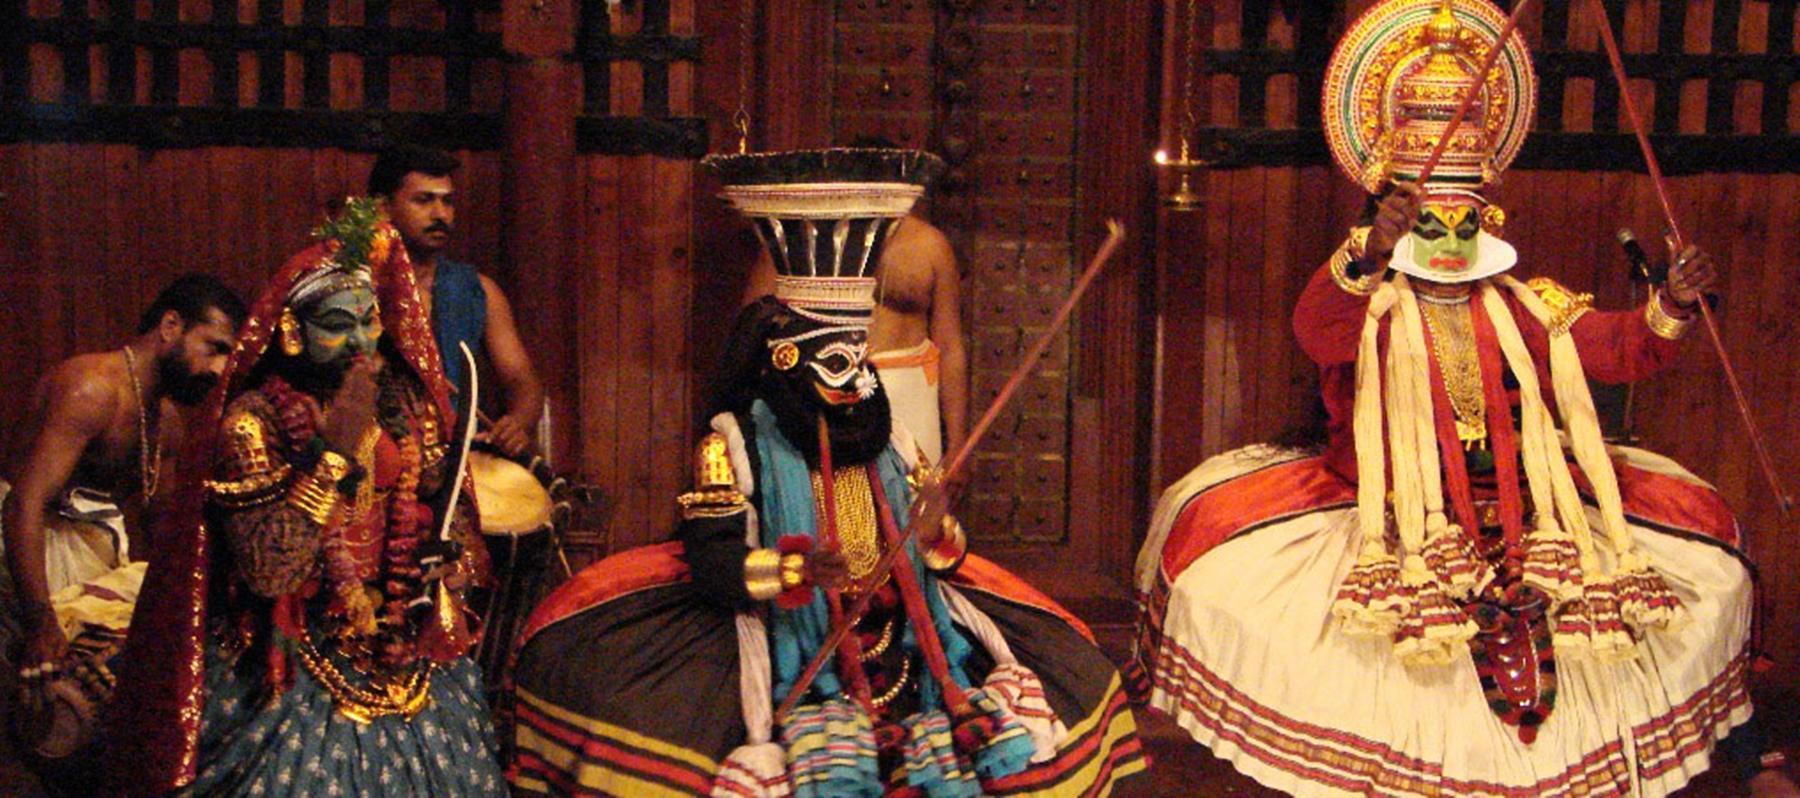 Cultural Shows in Kerala